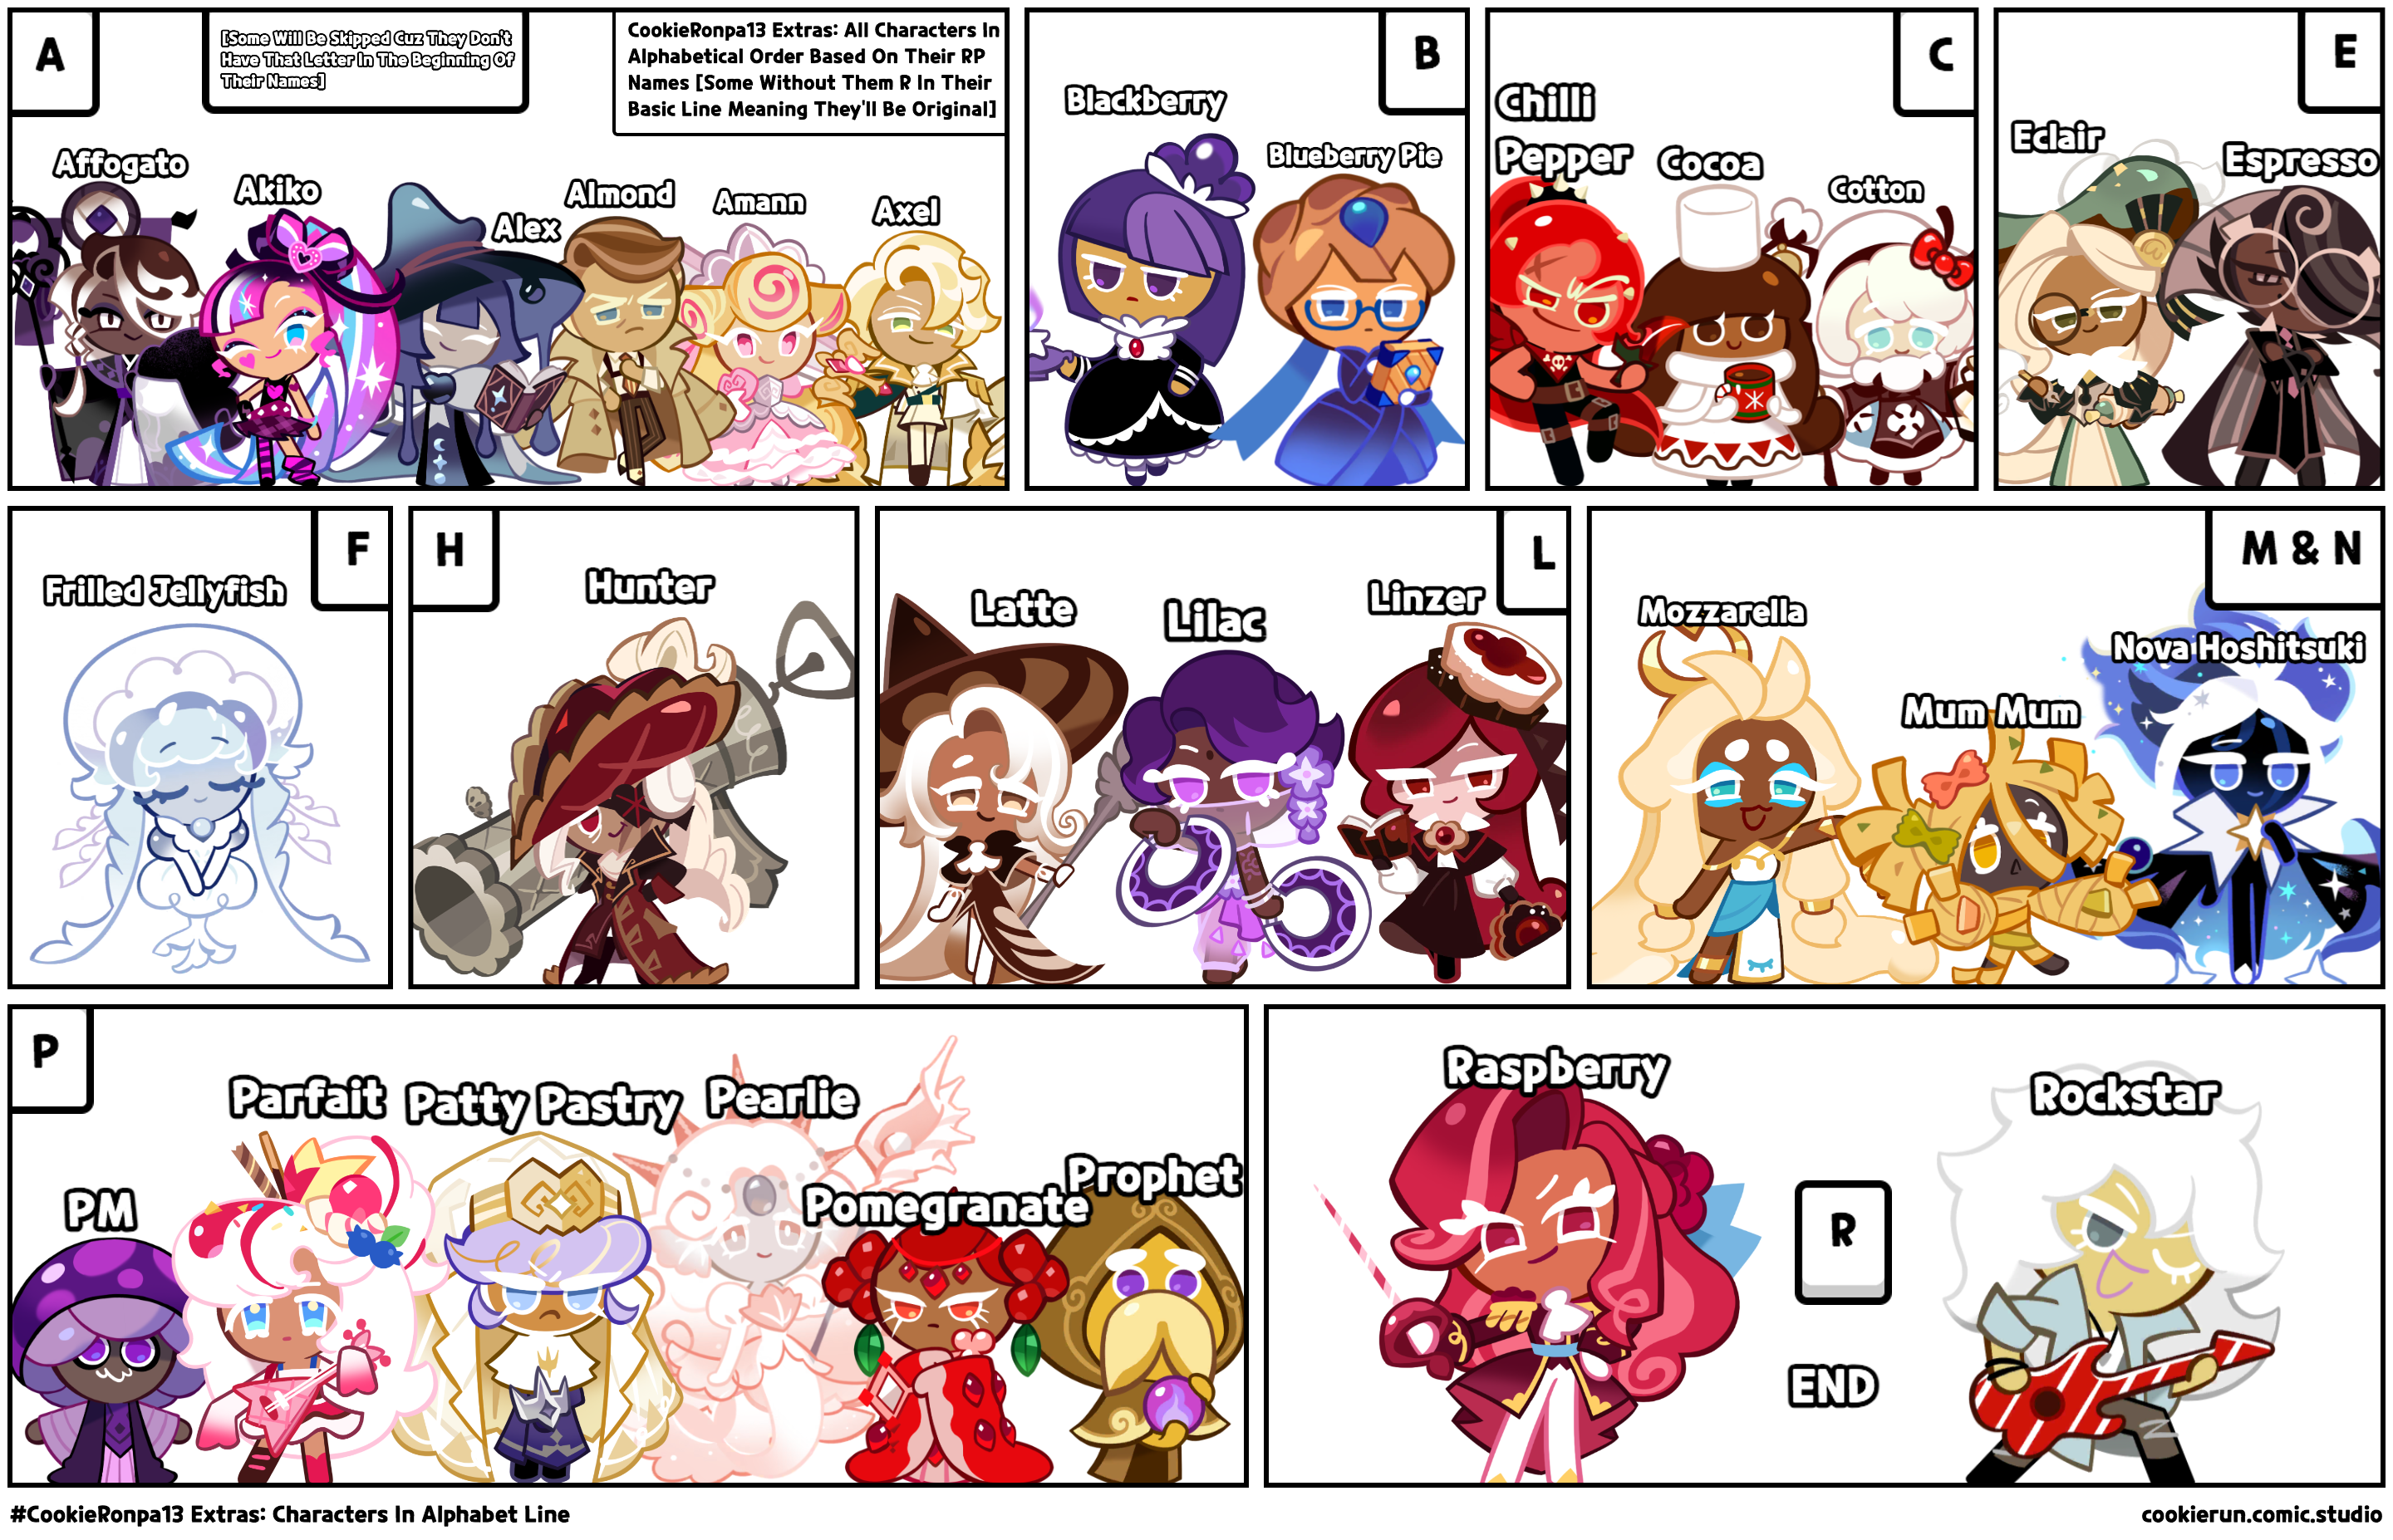 #CookieRonpa13 Extras: Characters In Alphabet Line